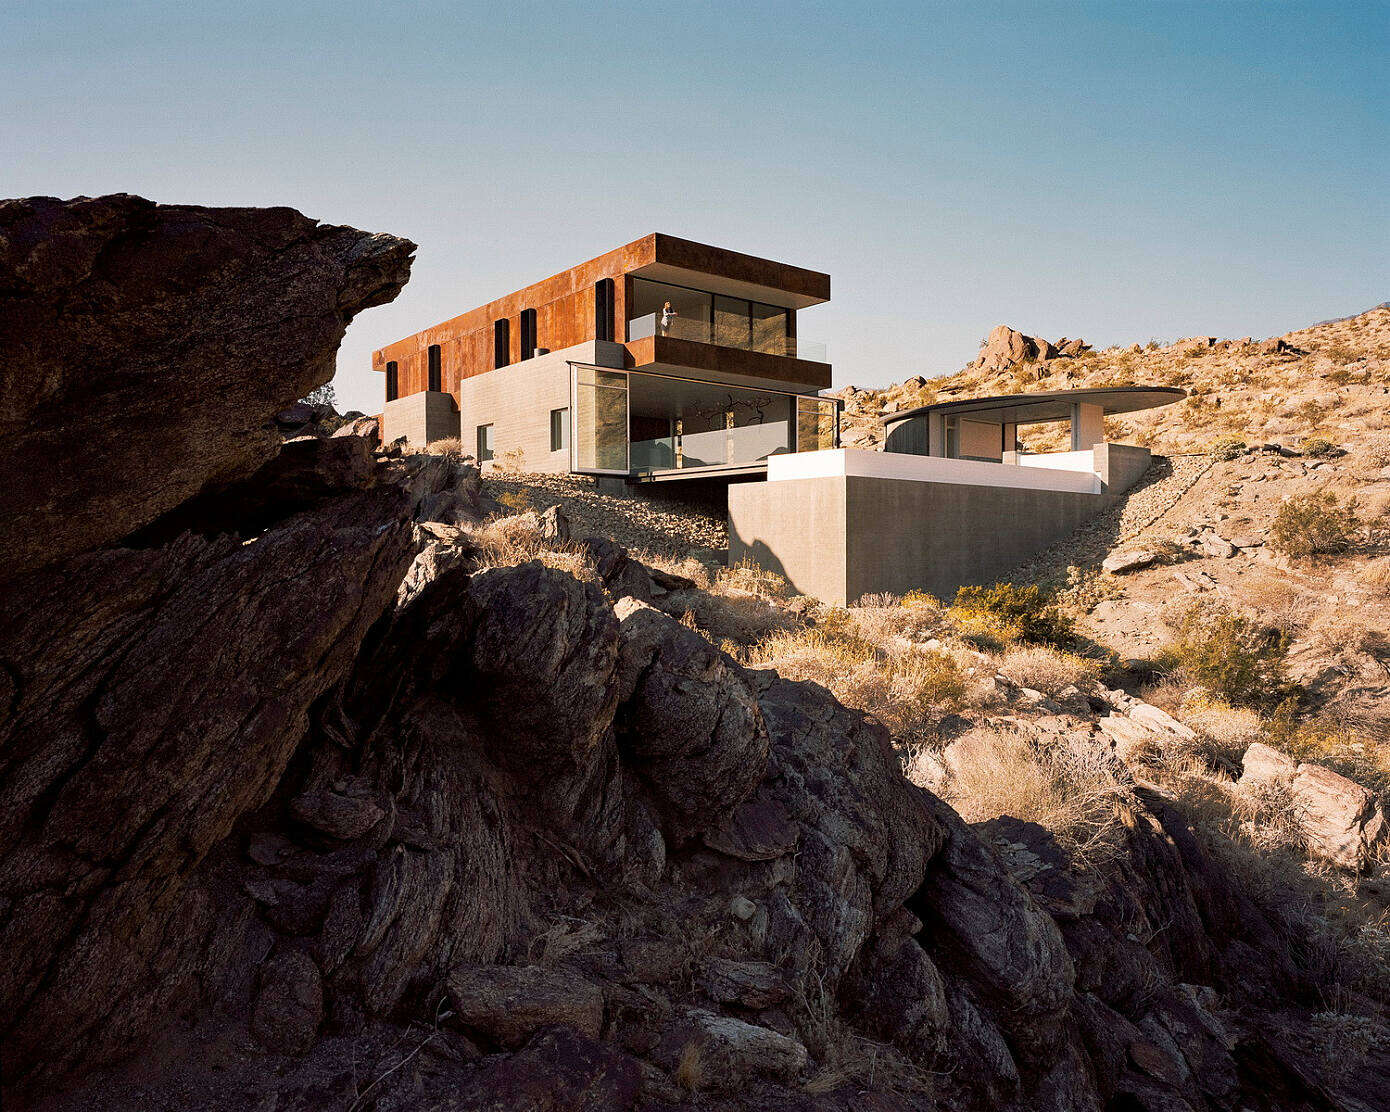 Ridge Mountain Residence by Ehrlich Yanai Rhee Chaney Architects